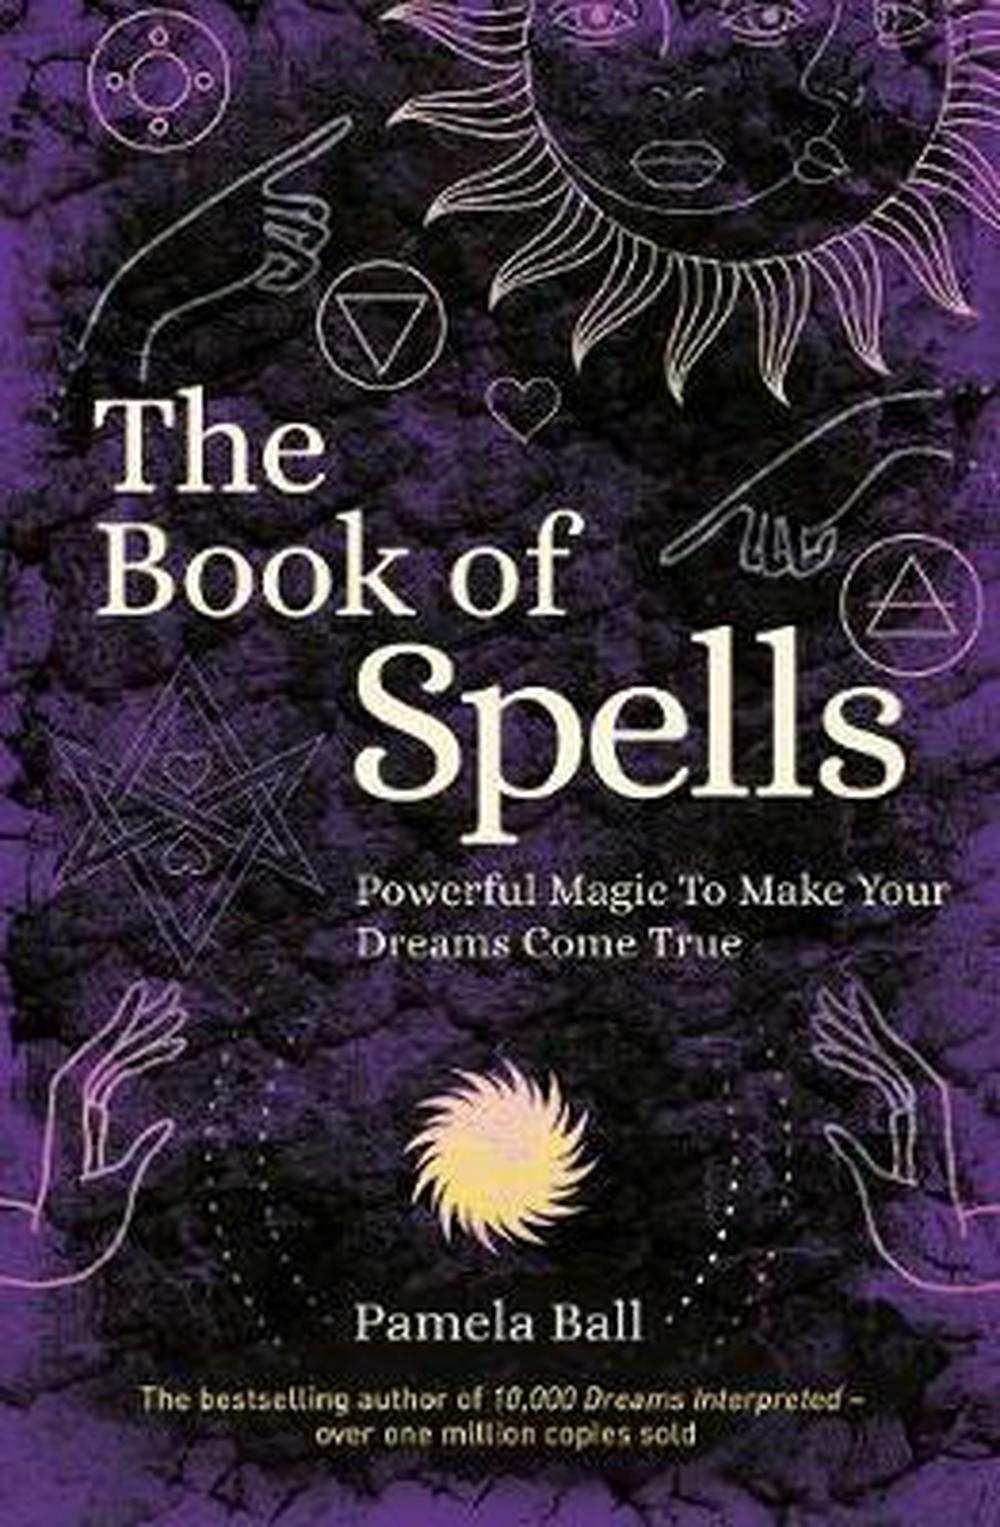 real black magic books